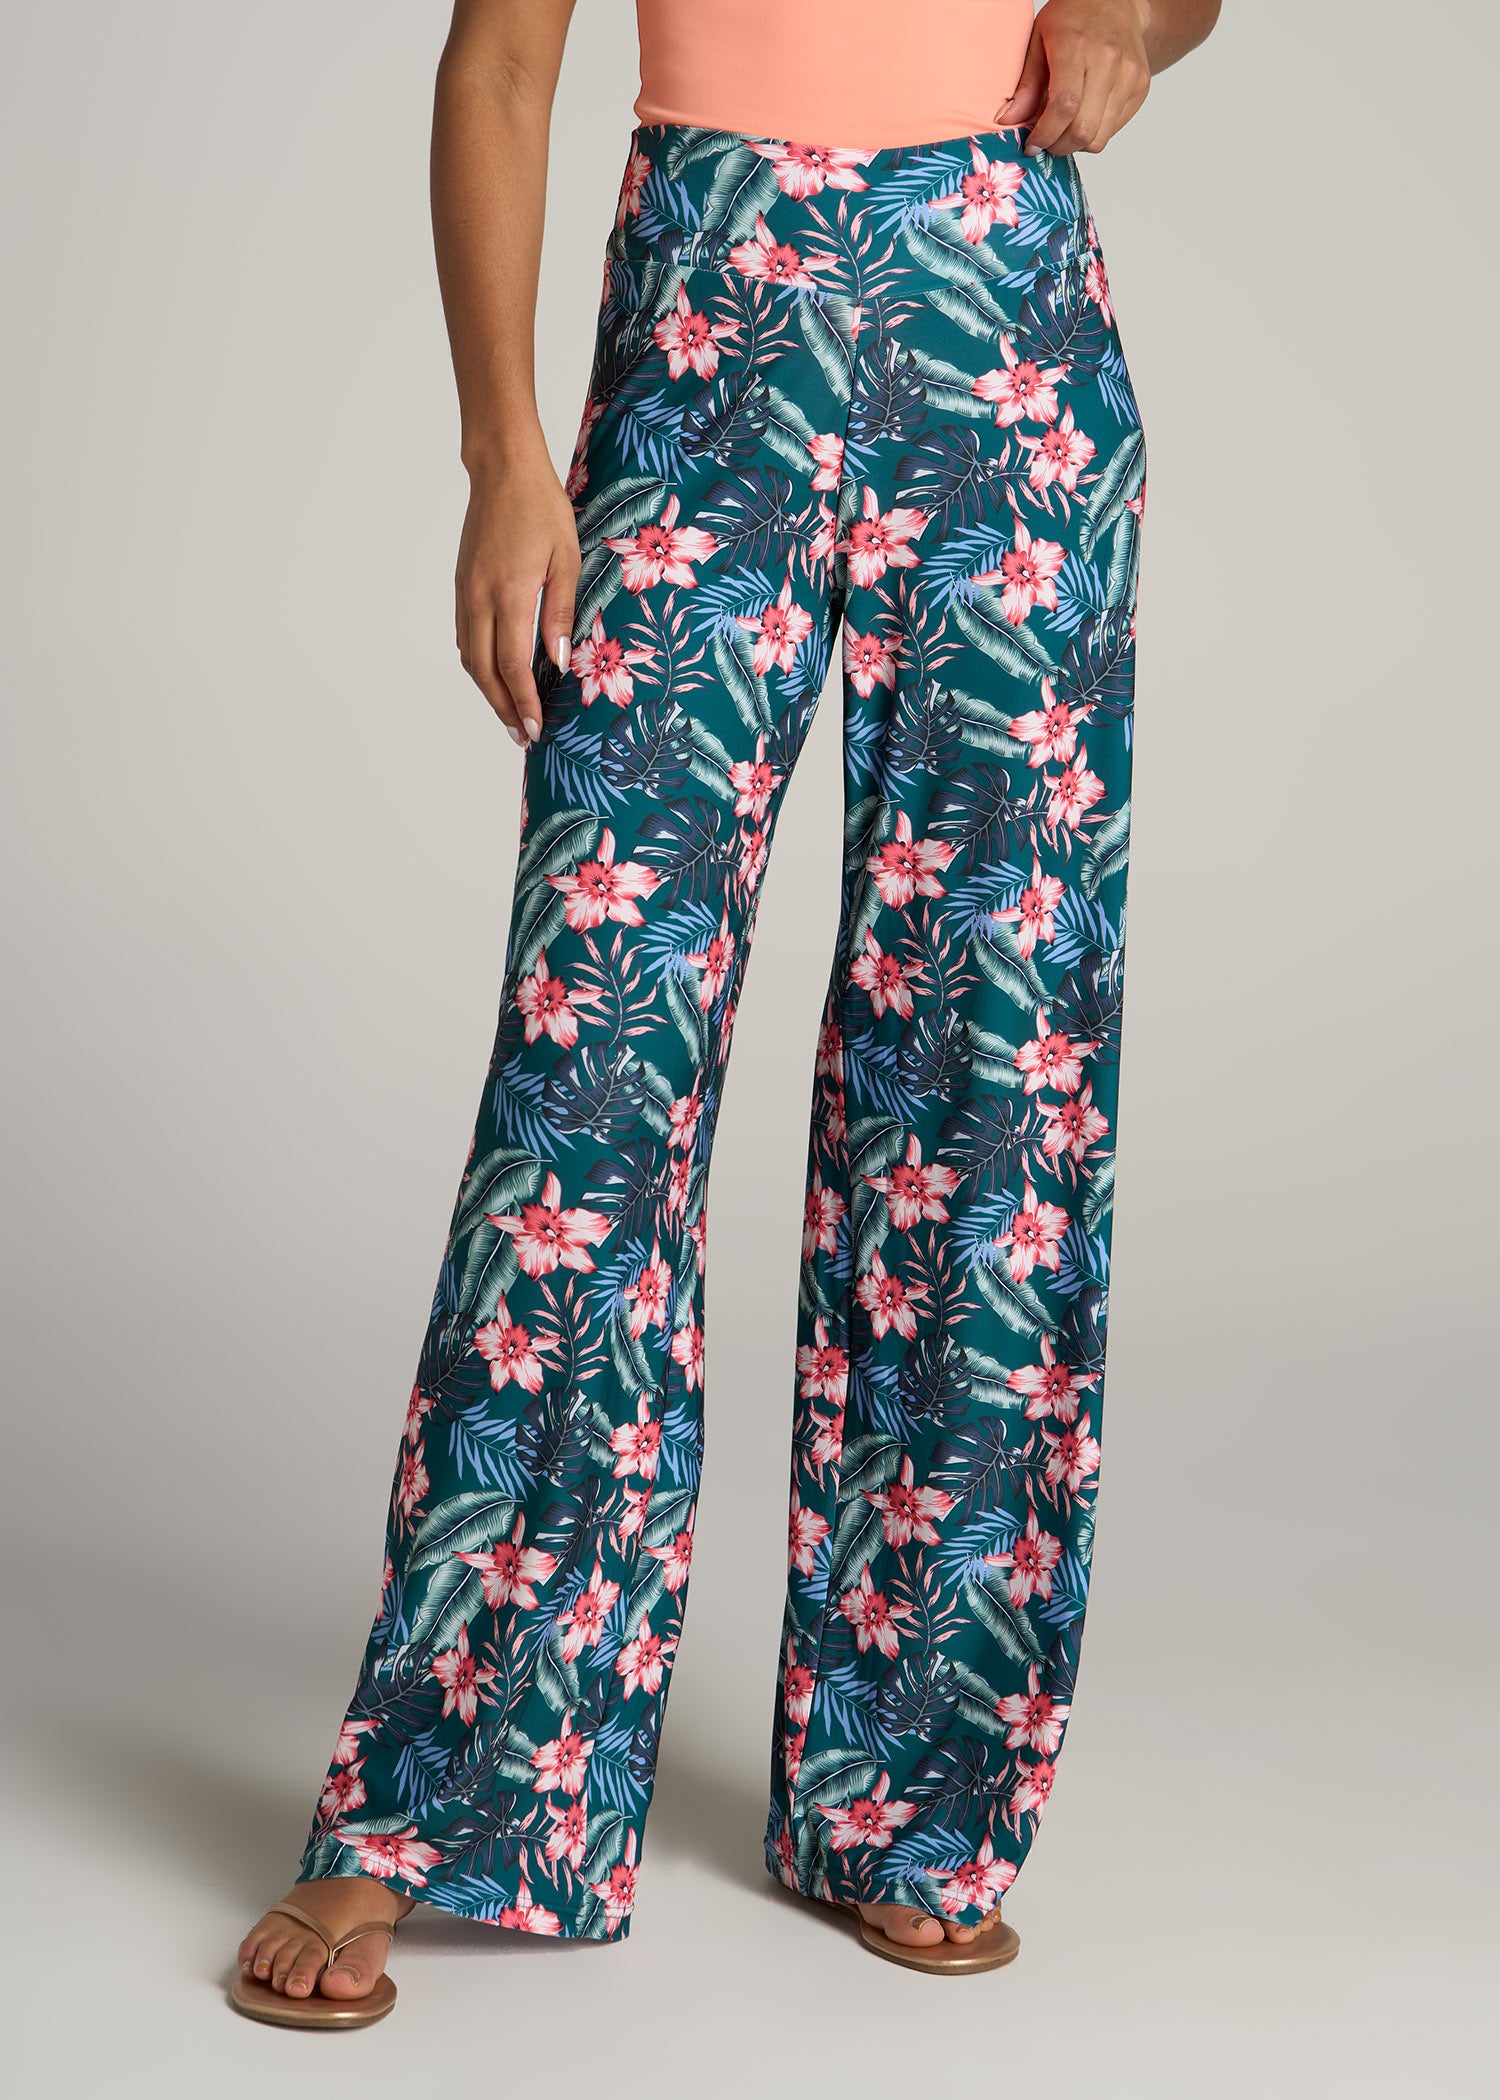 Floral Pants For Women